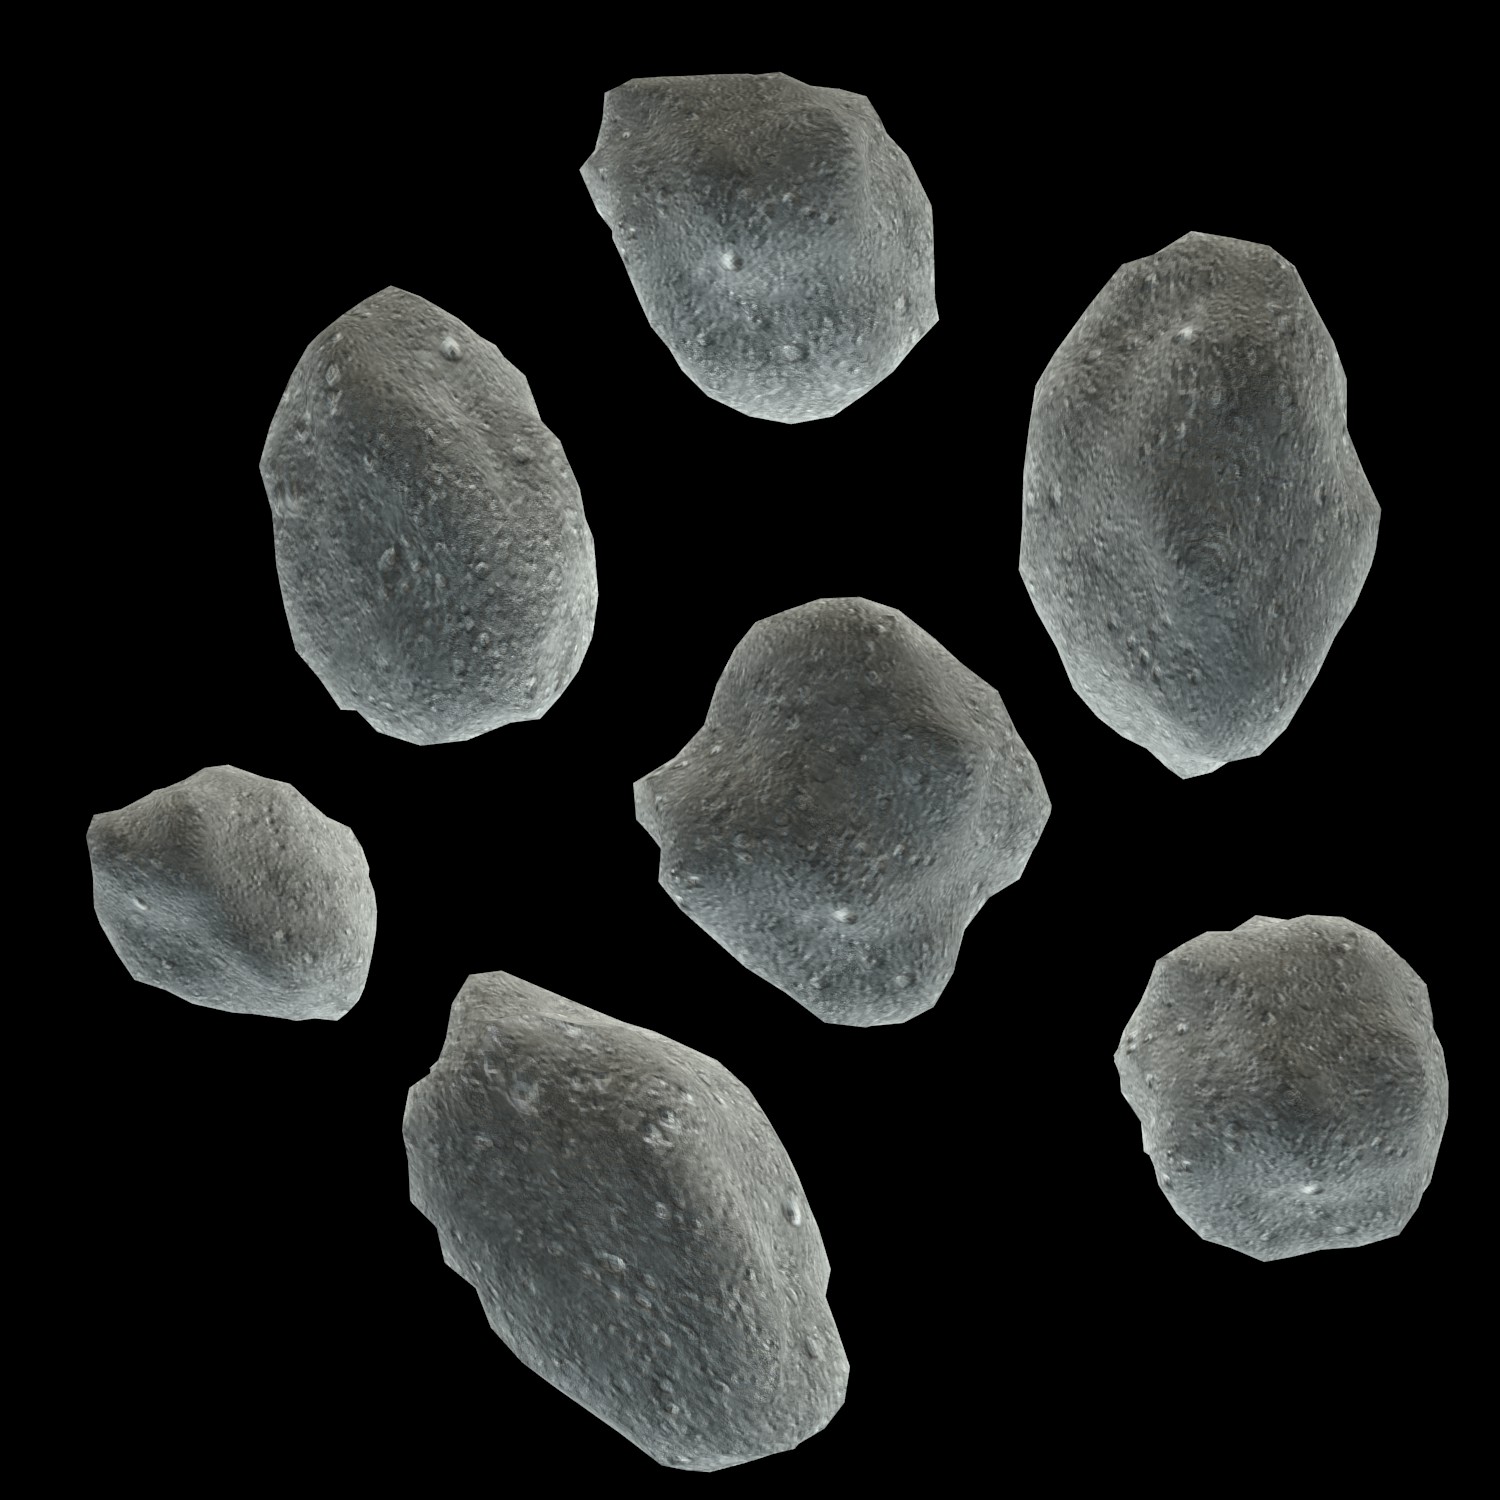 asteroids lowpoly 3d model fbx blend obj 152252